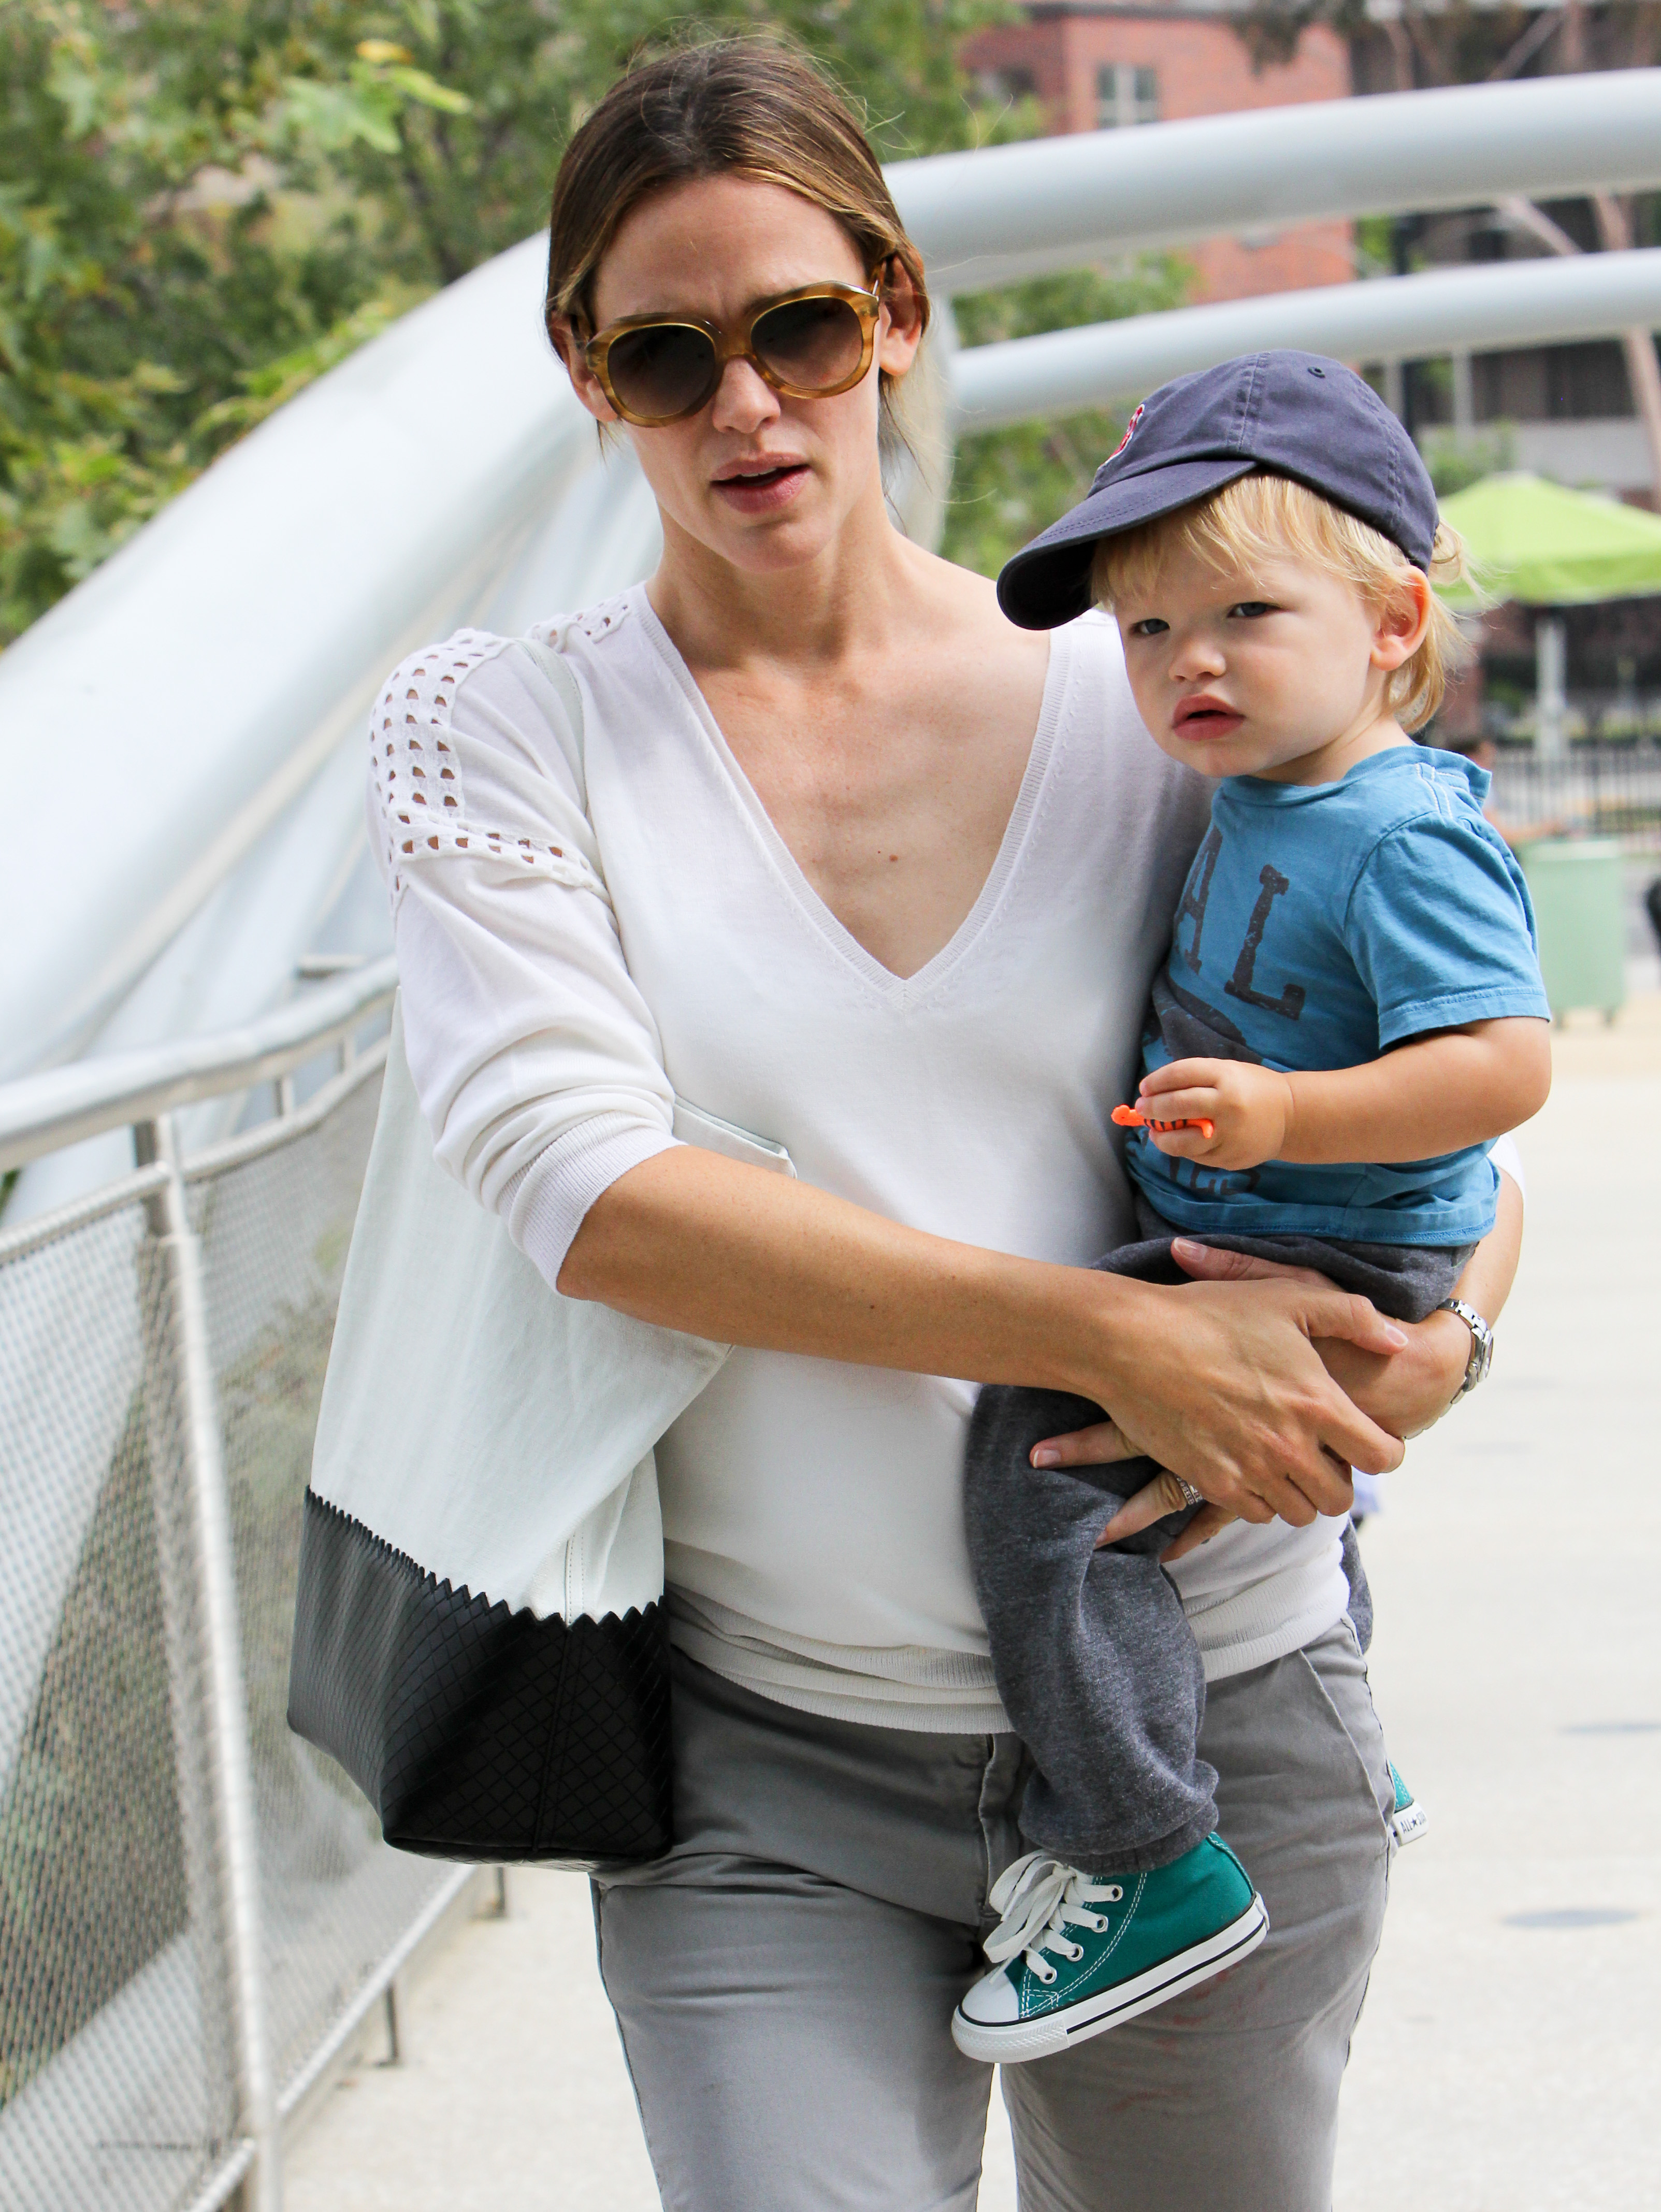 Jennifer Garner and Samuel Affleck celebrity sighting in Los Angeles, California on August 3, 2013 | Source: Getty Images